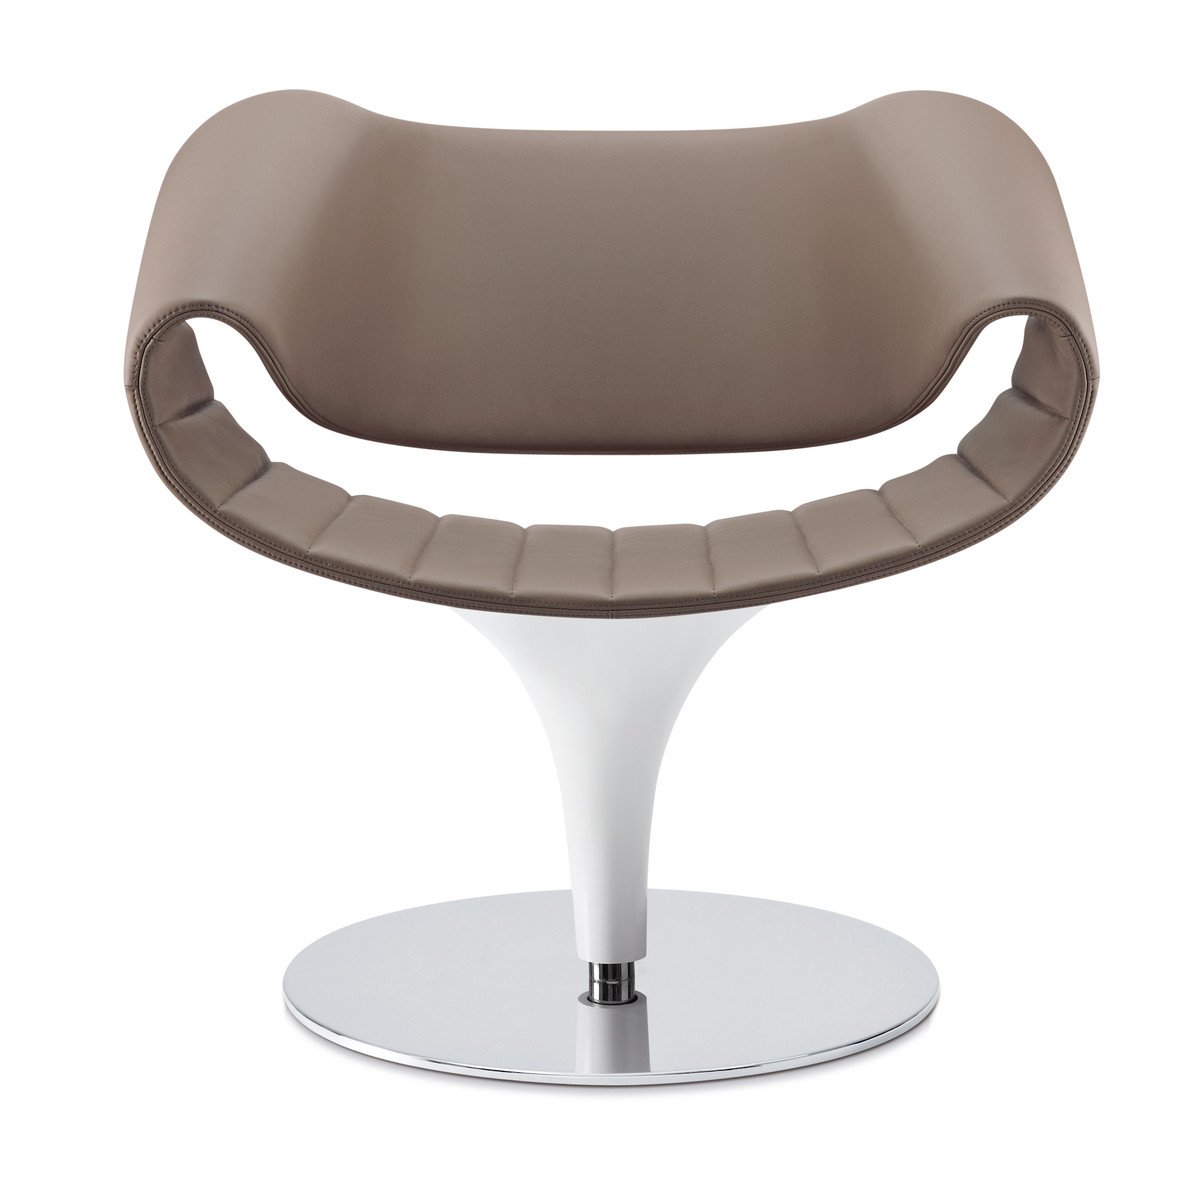 Perillo · The perfect chair for design lovers. Order now| ZÜCO: Züco ...